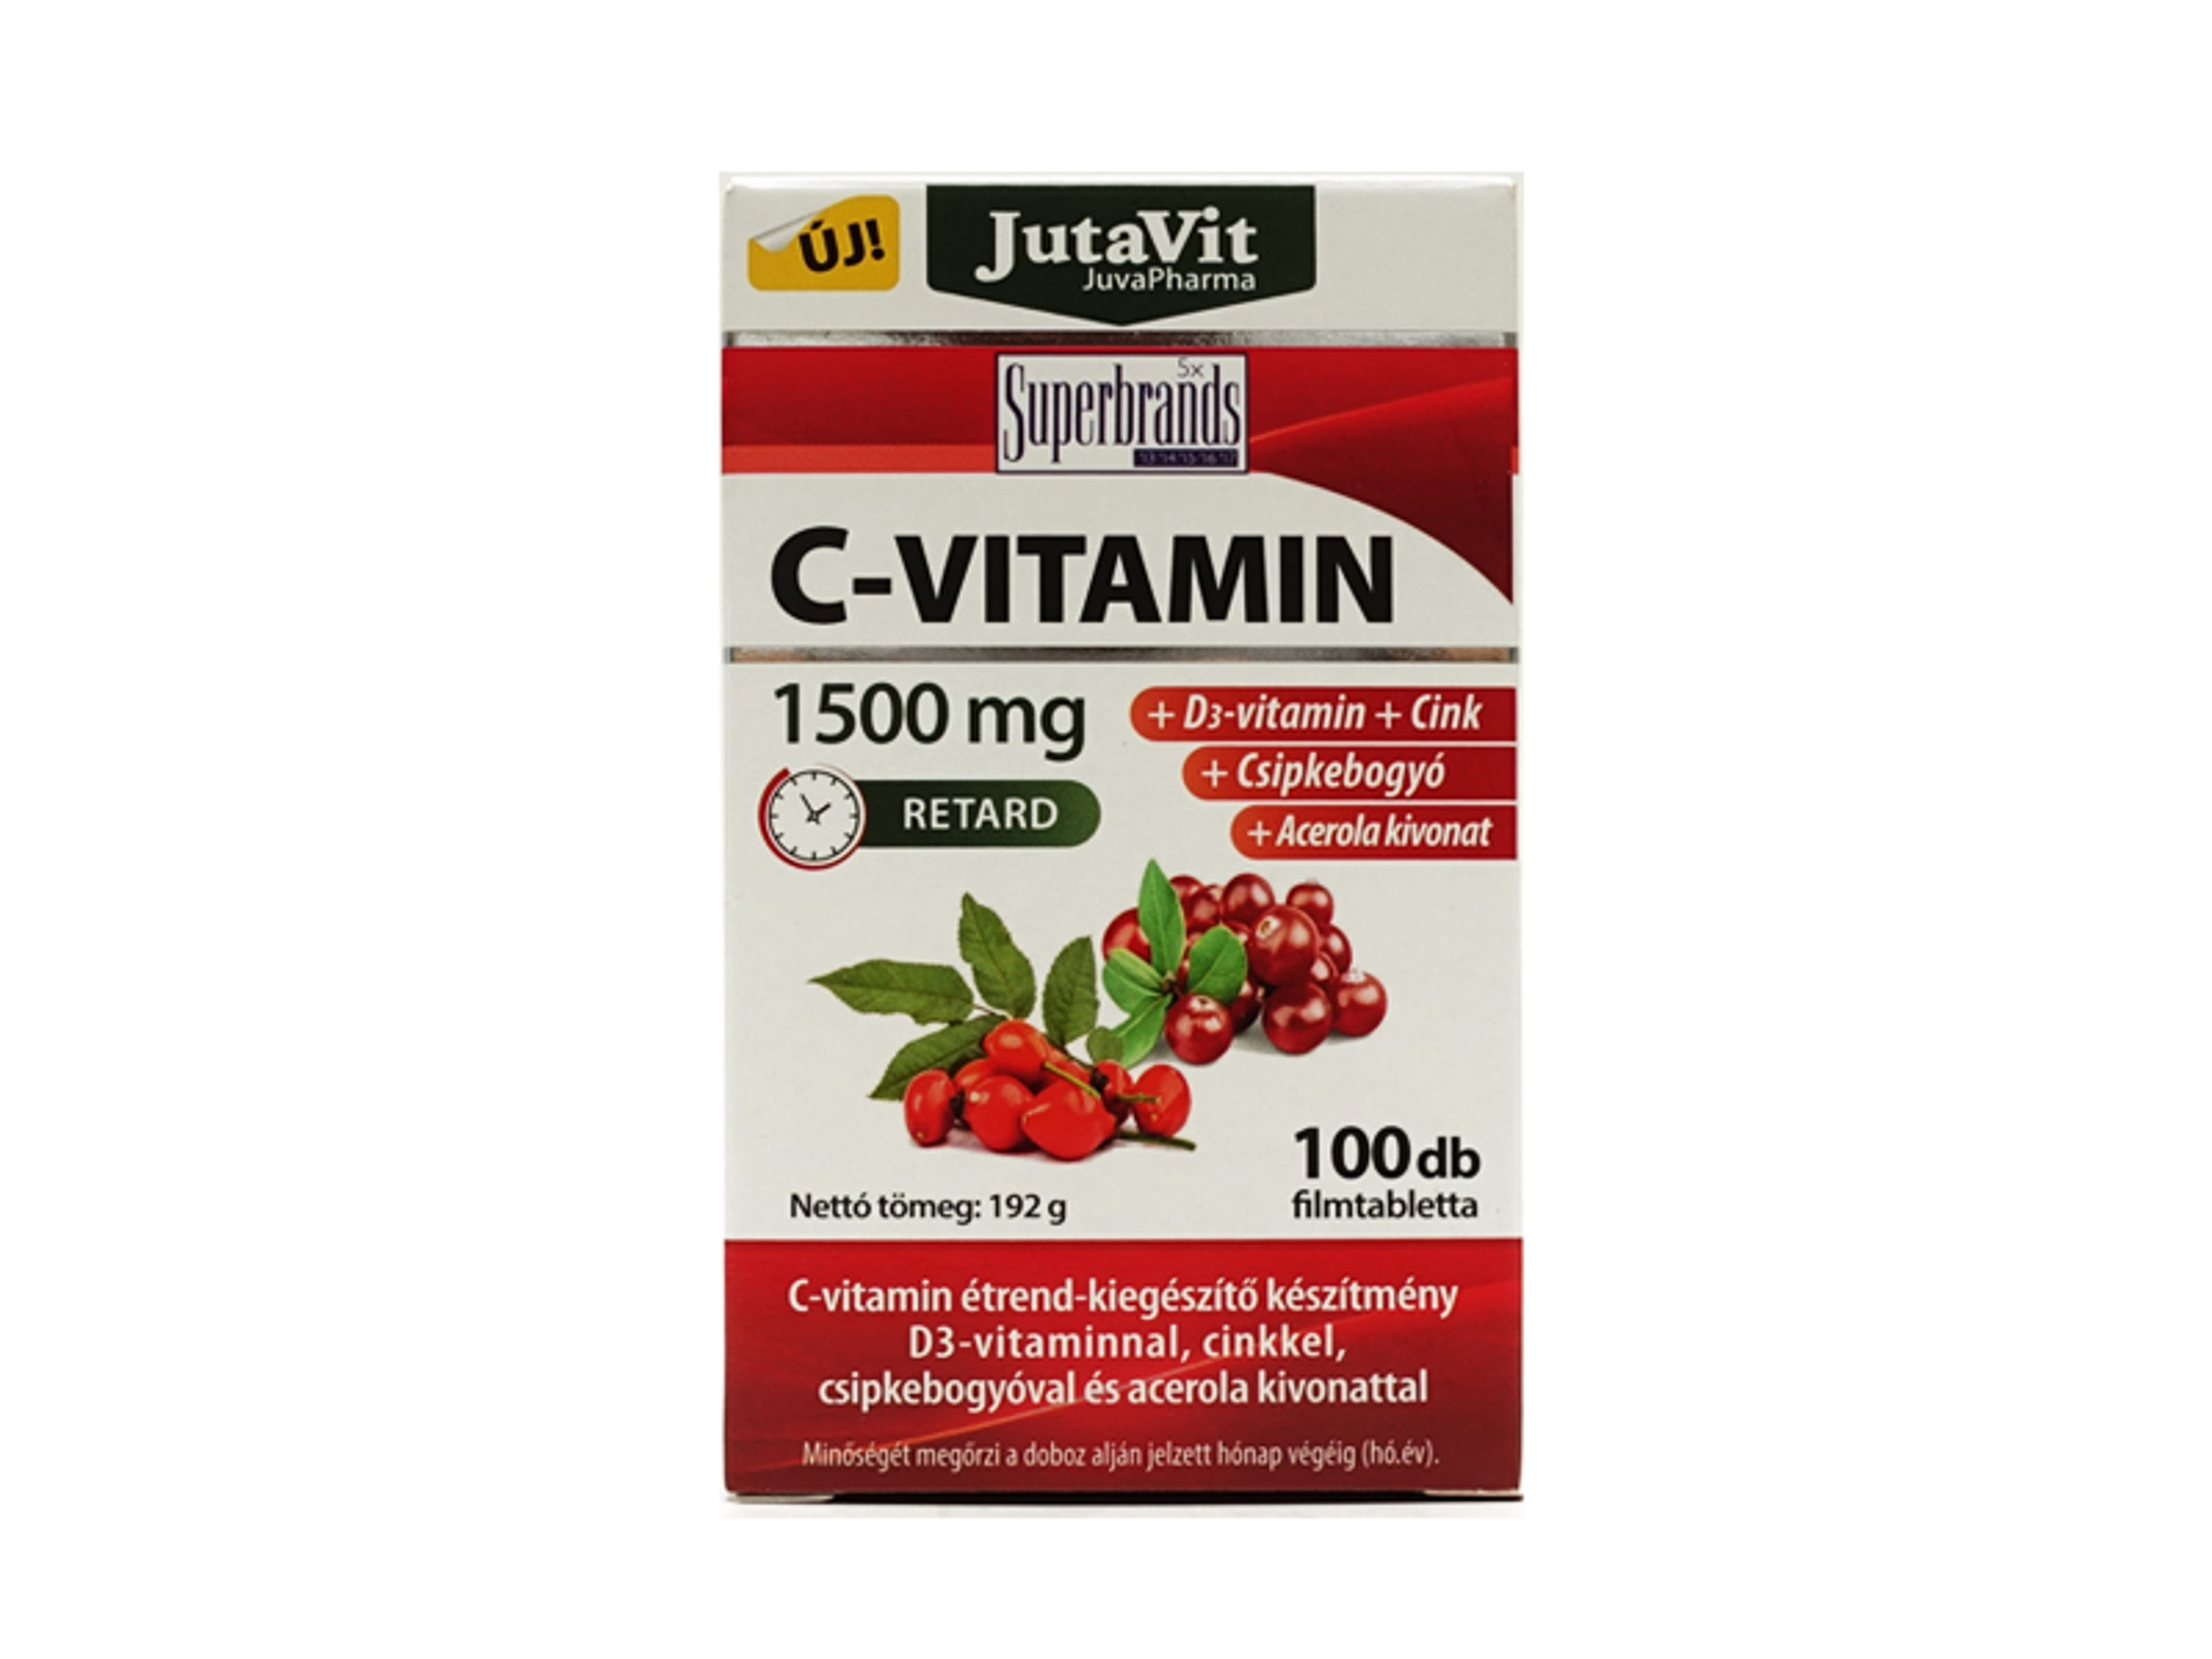 JutaVit C-Vitamin 1500mg Csipkebogyó+ Acerola+D3-Vitamin Filmtabletta - 100 db